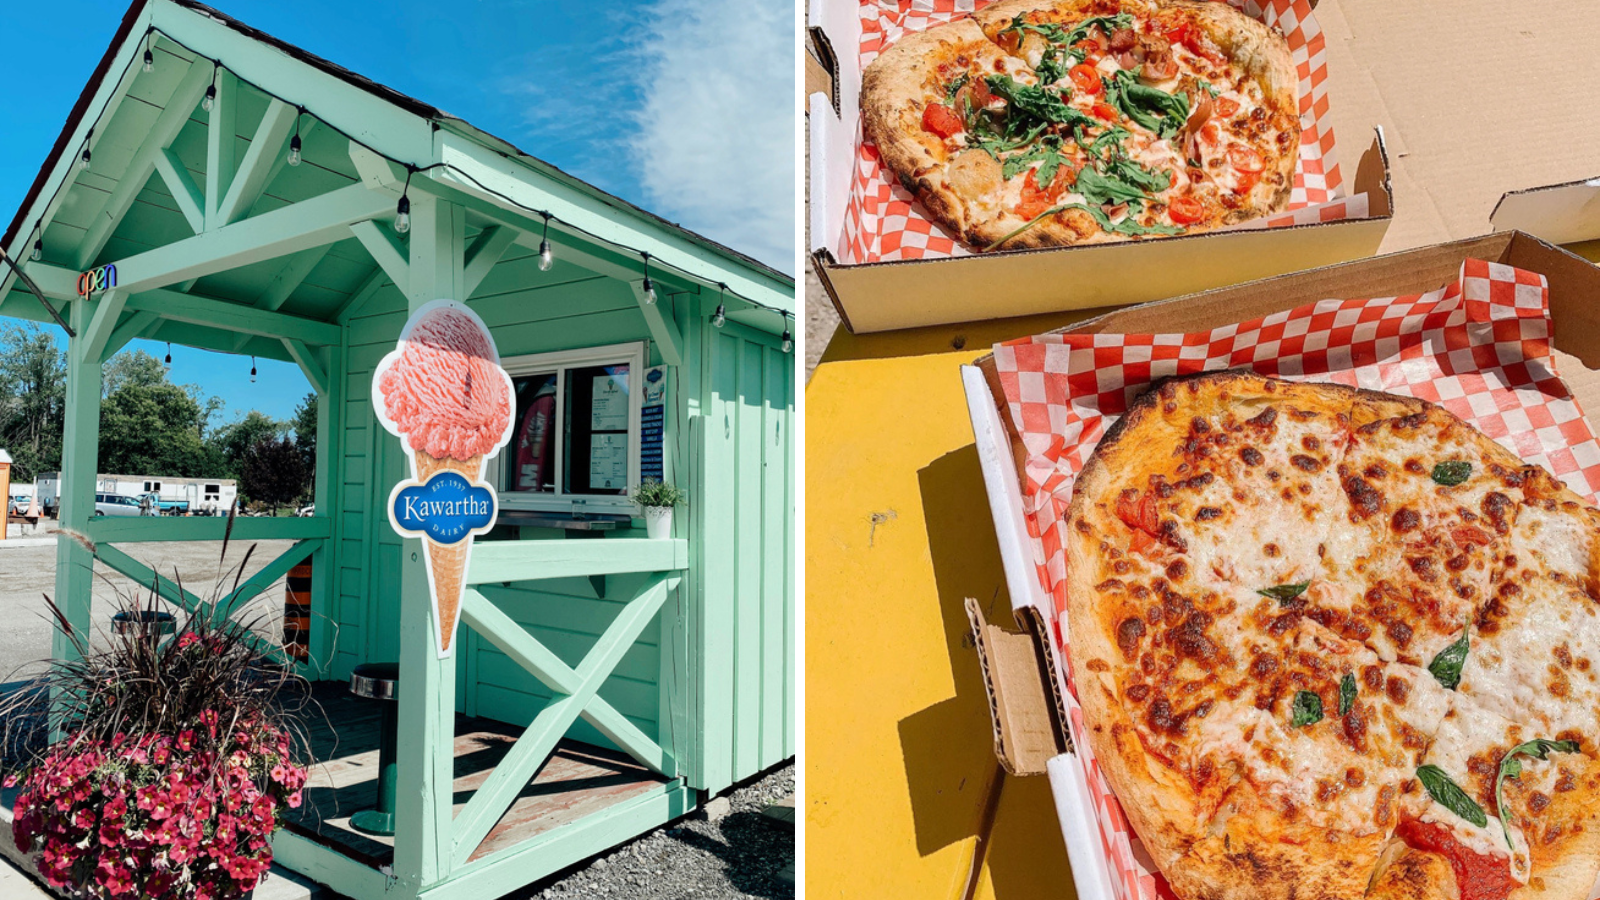 Ice cream hut at Clarington Food Truck Alley and pizza at Oshawa Food Truck Corral